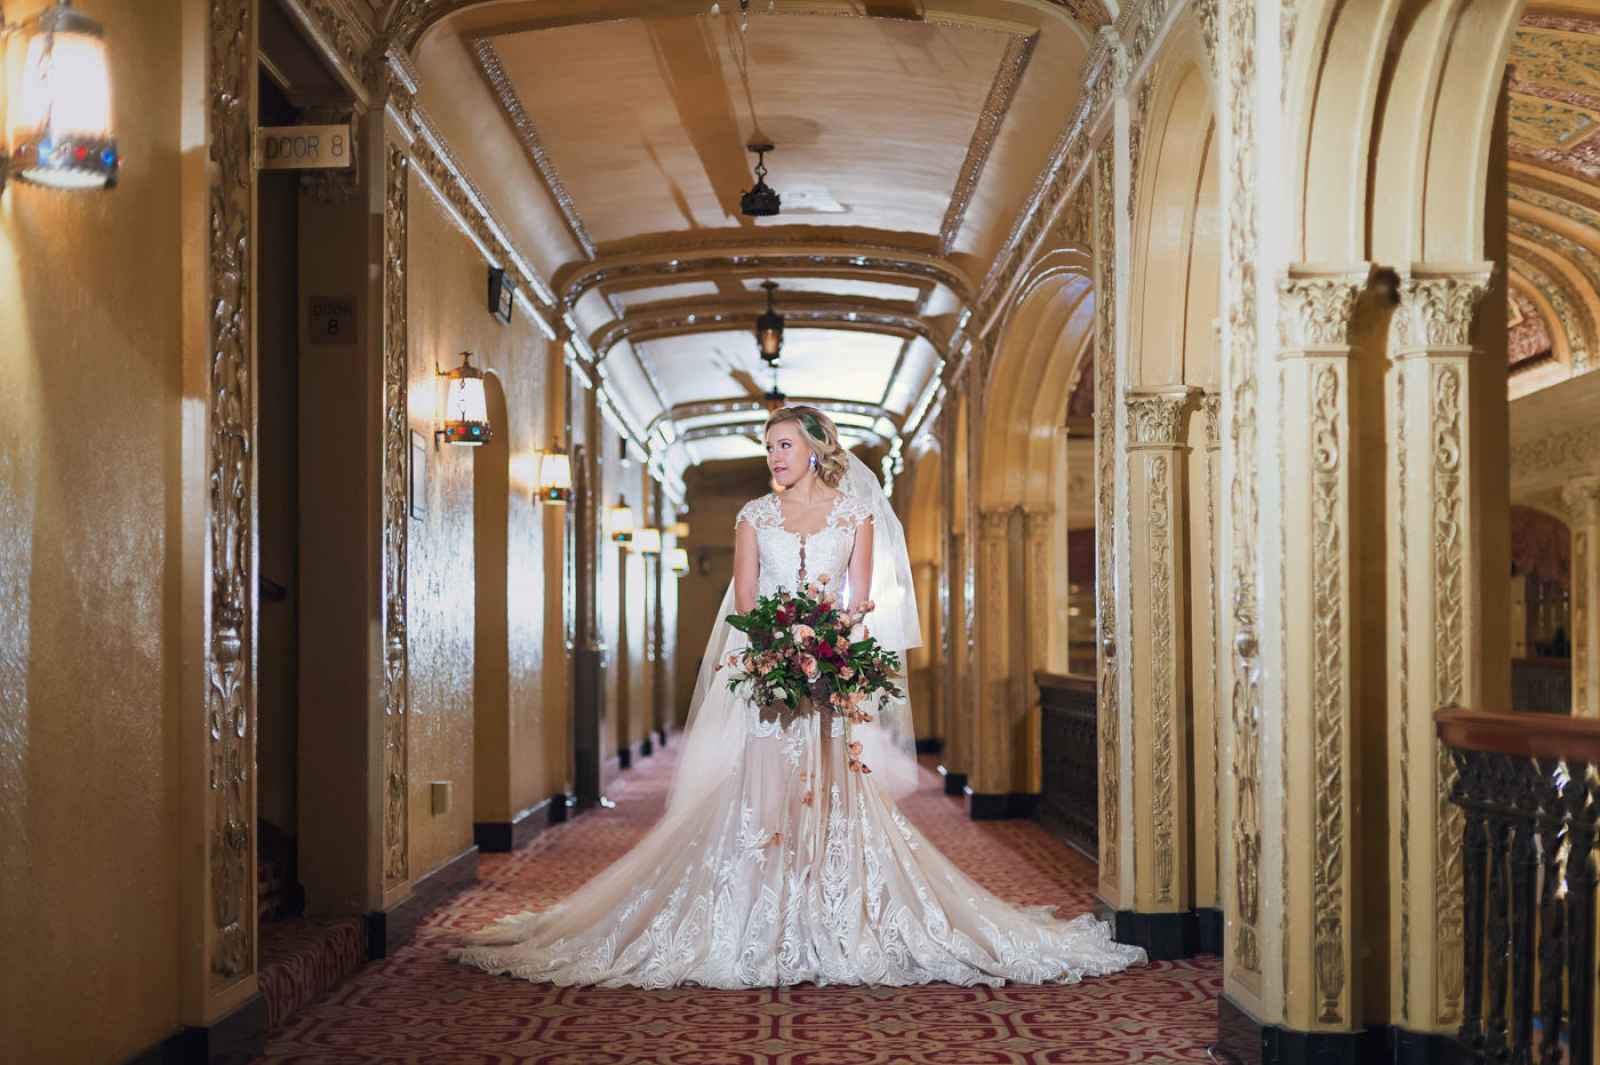 A Historical Fort Wayne Wedding Venue for the Modern Bride